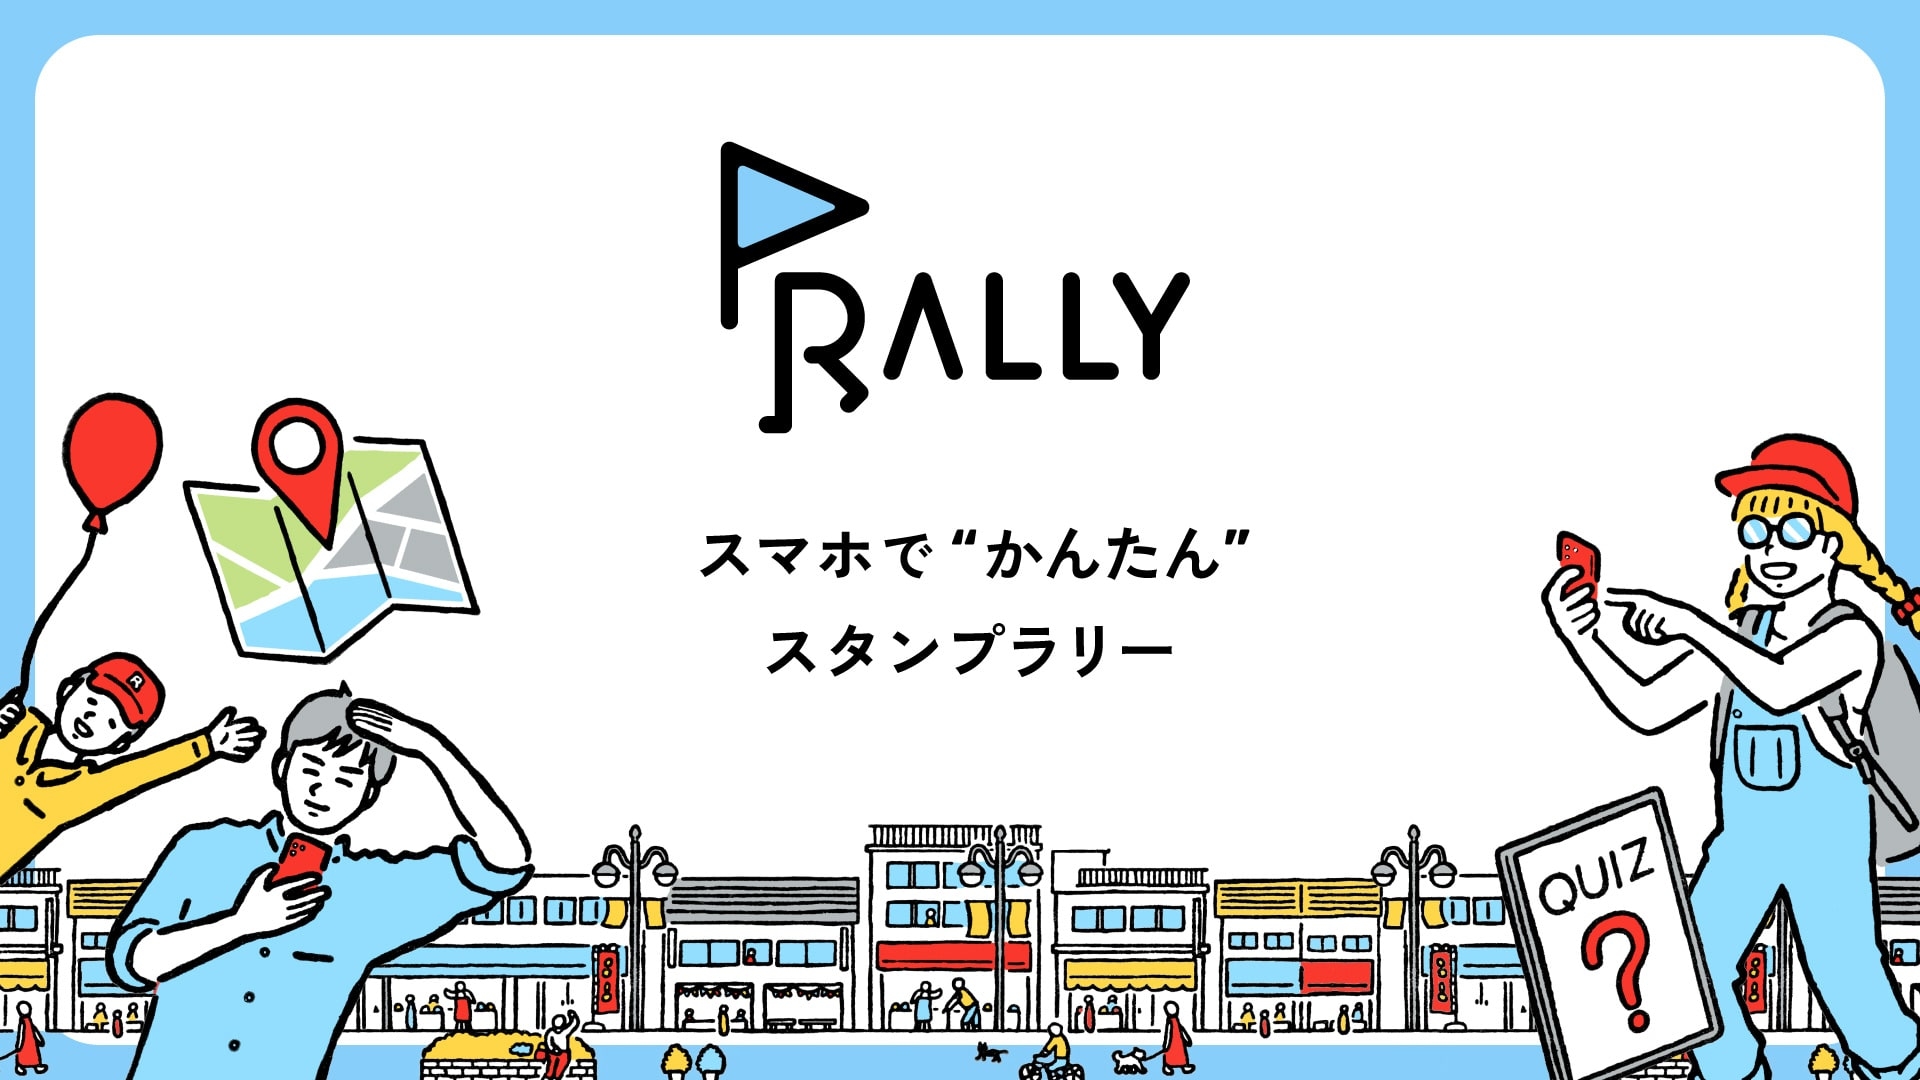 RALLY - スマホで簡単スタンプラリー01